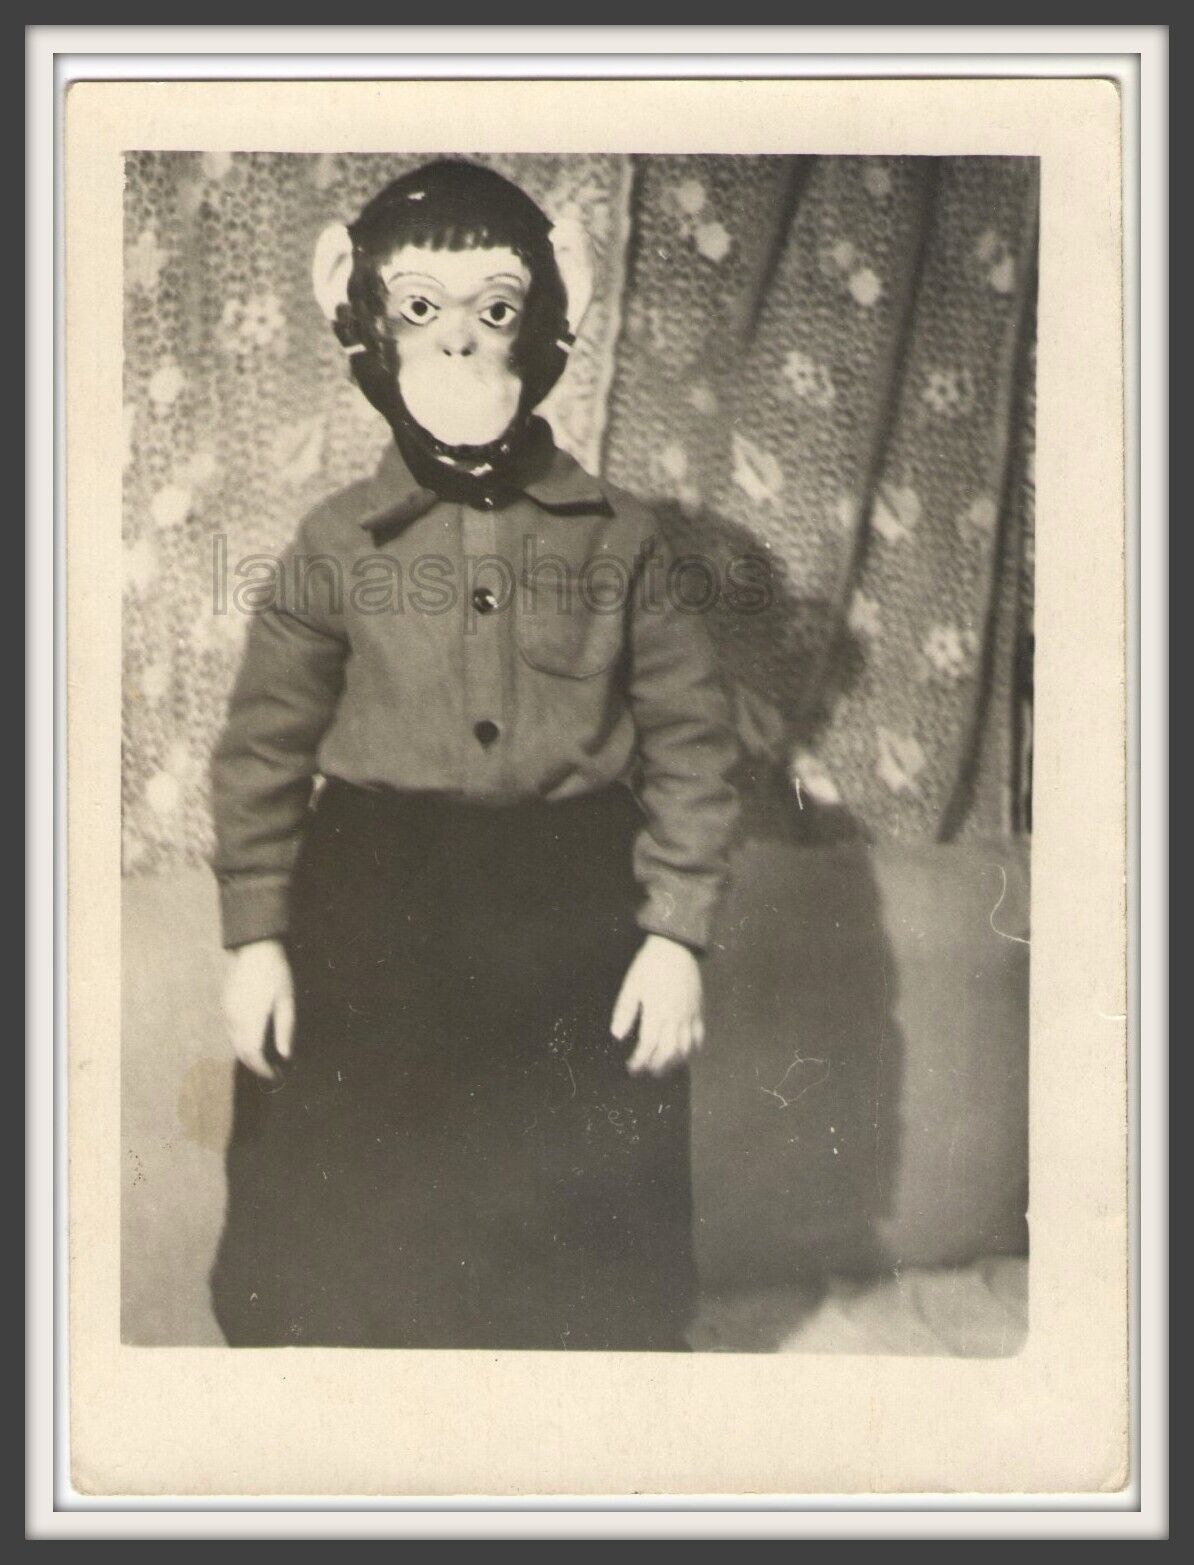 1950s Masked boy Masks Monkey Faceless kid unusual funny odd found vintage photo